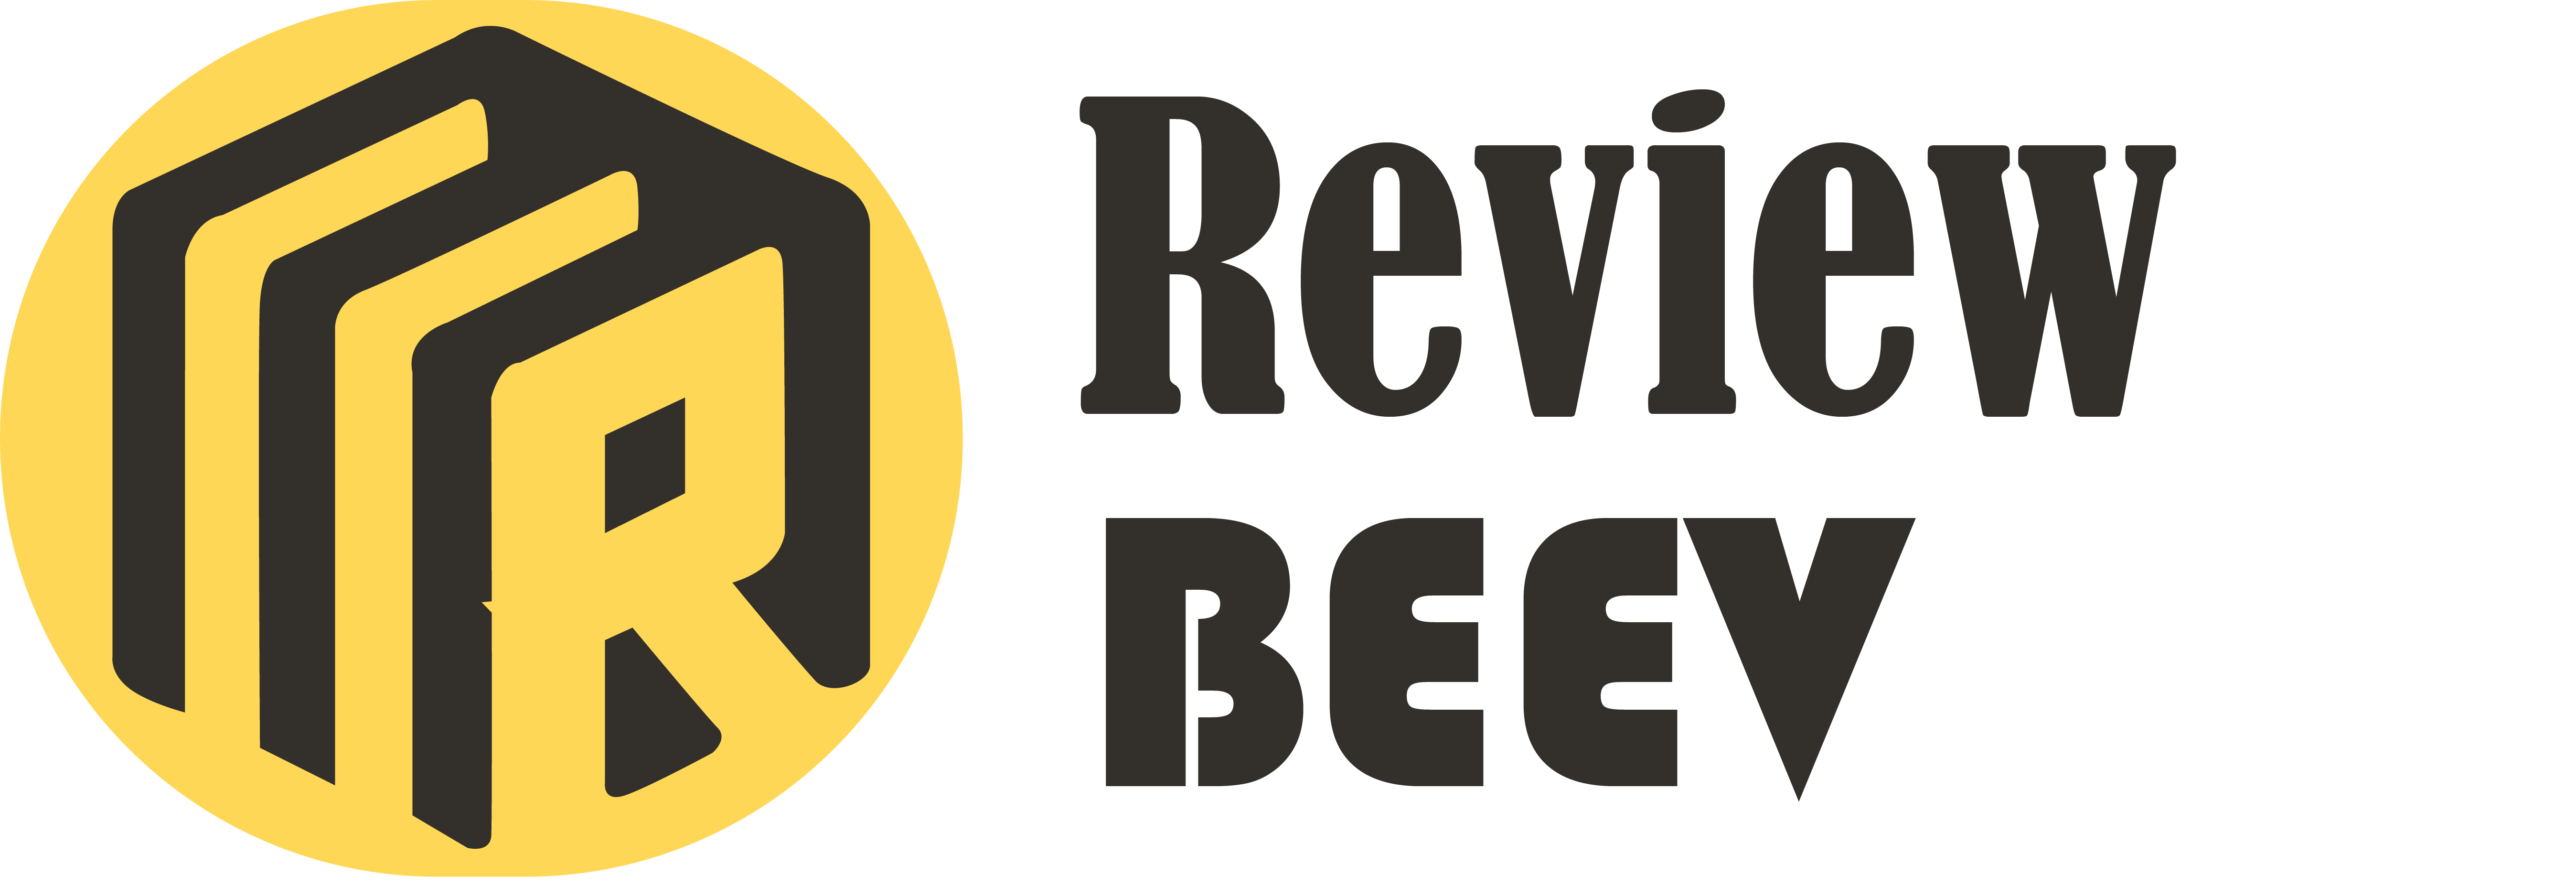 review beev logo